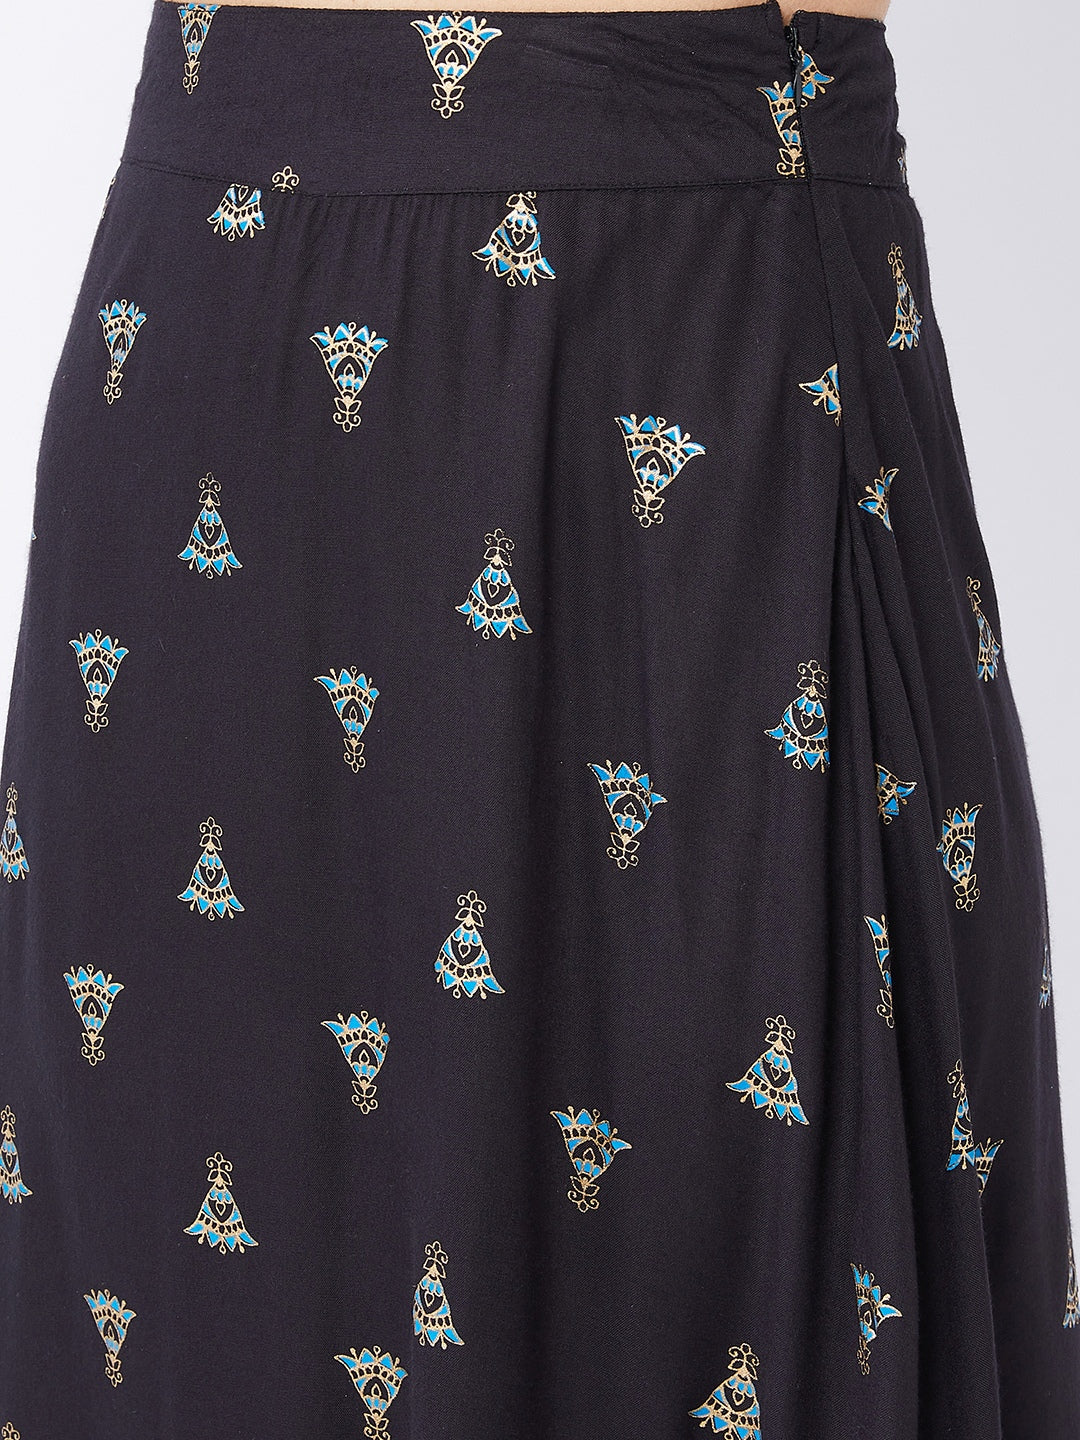 Pitch Black Printed Side Slit Long Skirt